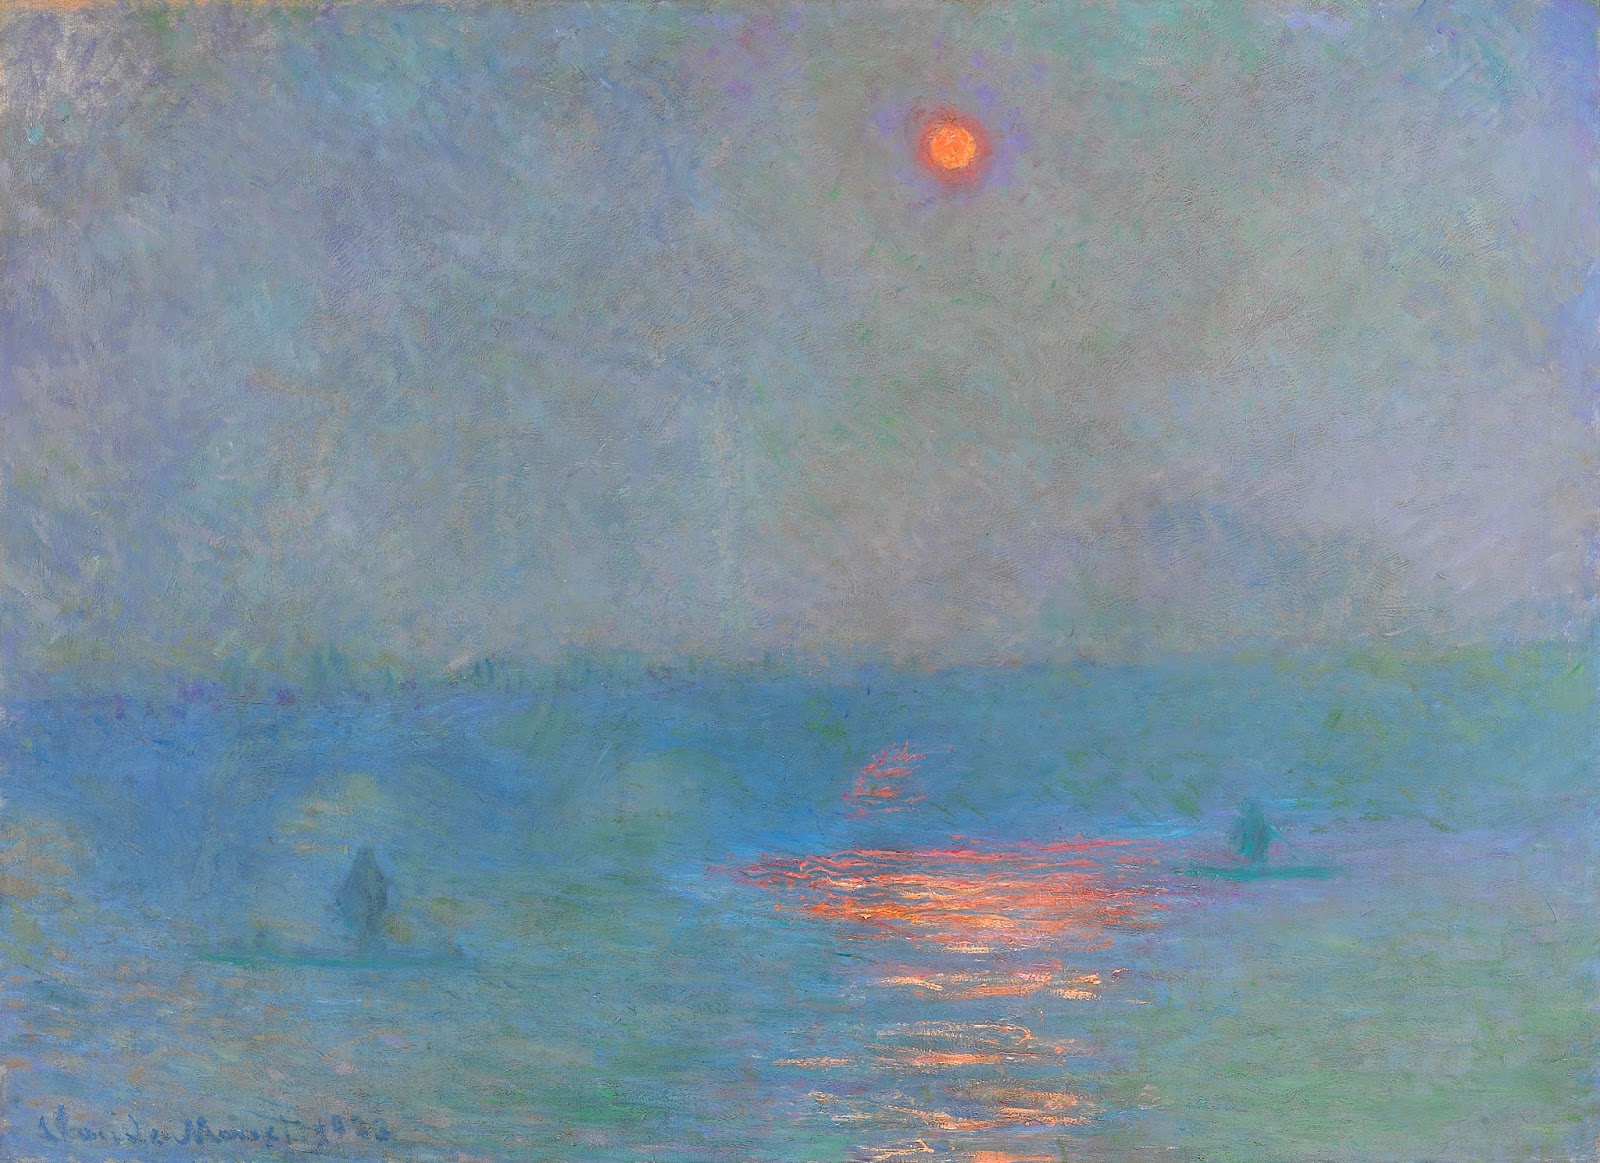 Claude+Monet-1840-1926 (304).jpg